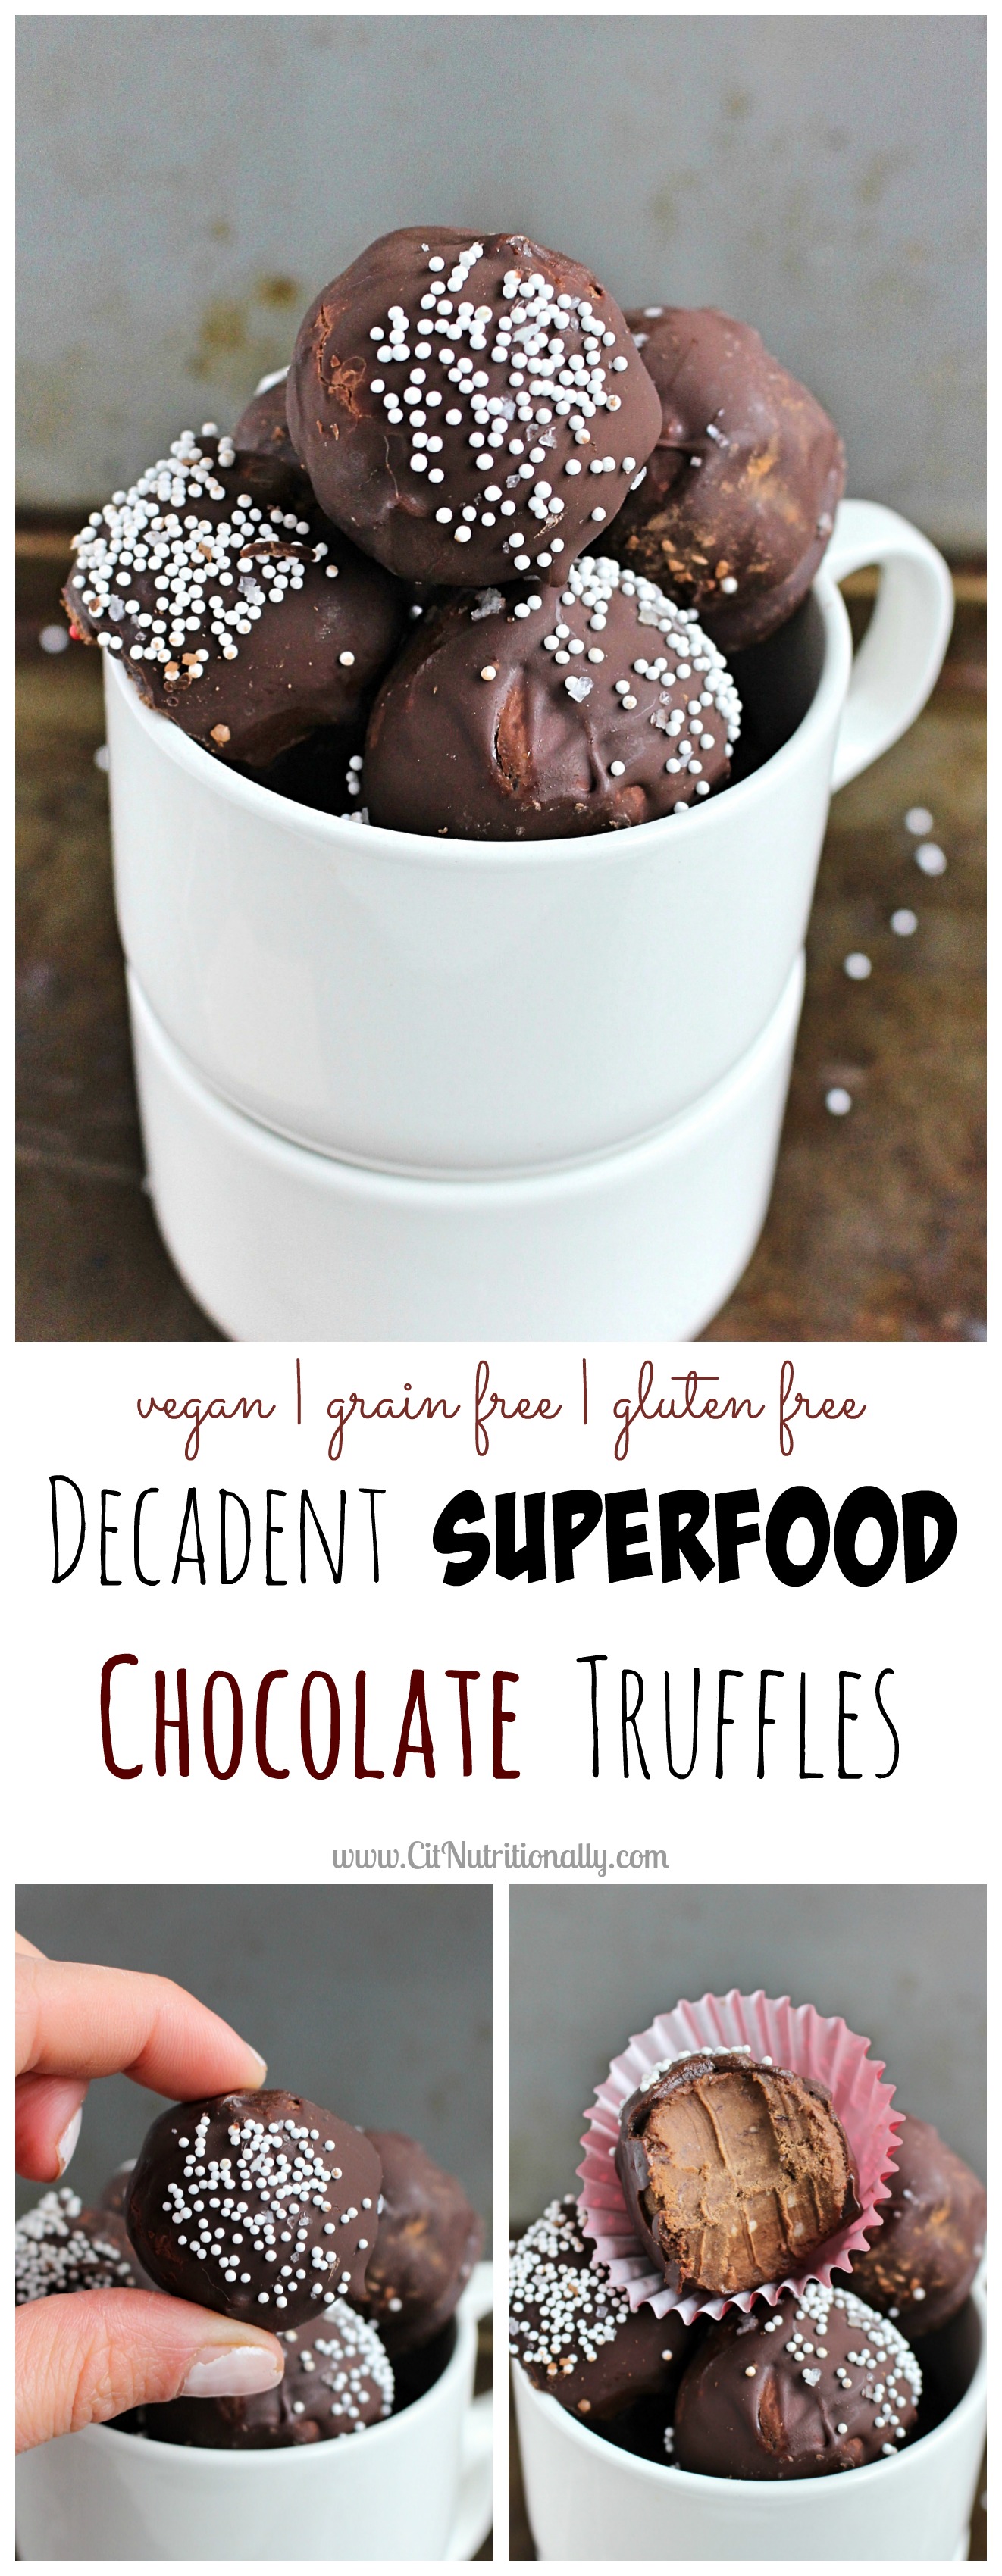 Nut Free Decadent Superfood Chocolate Truffles {Frugal Friday Week 7} | C it Nutritionally Gluten free. Grain free. Vegan.